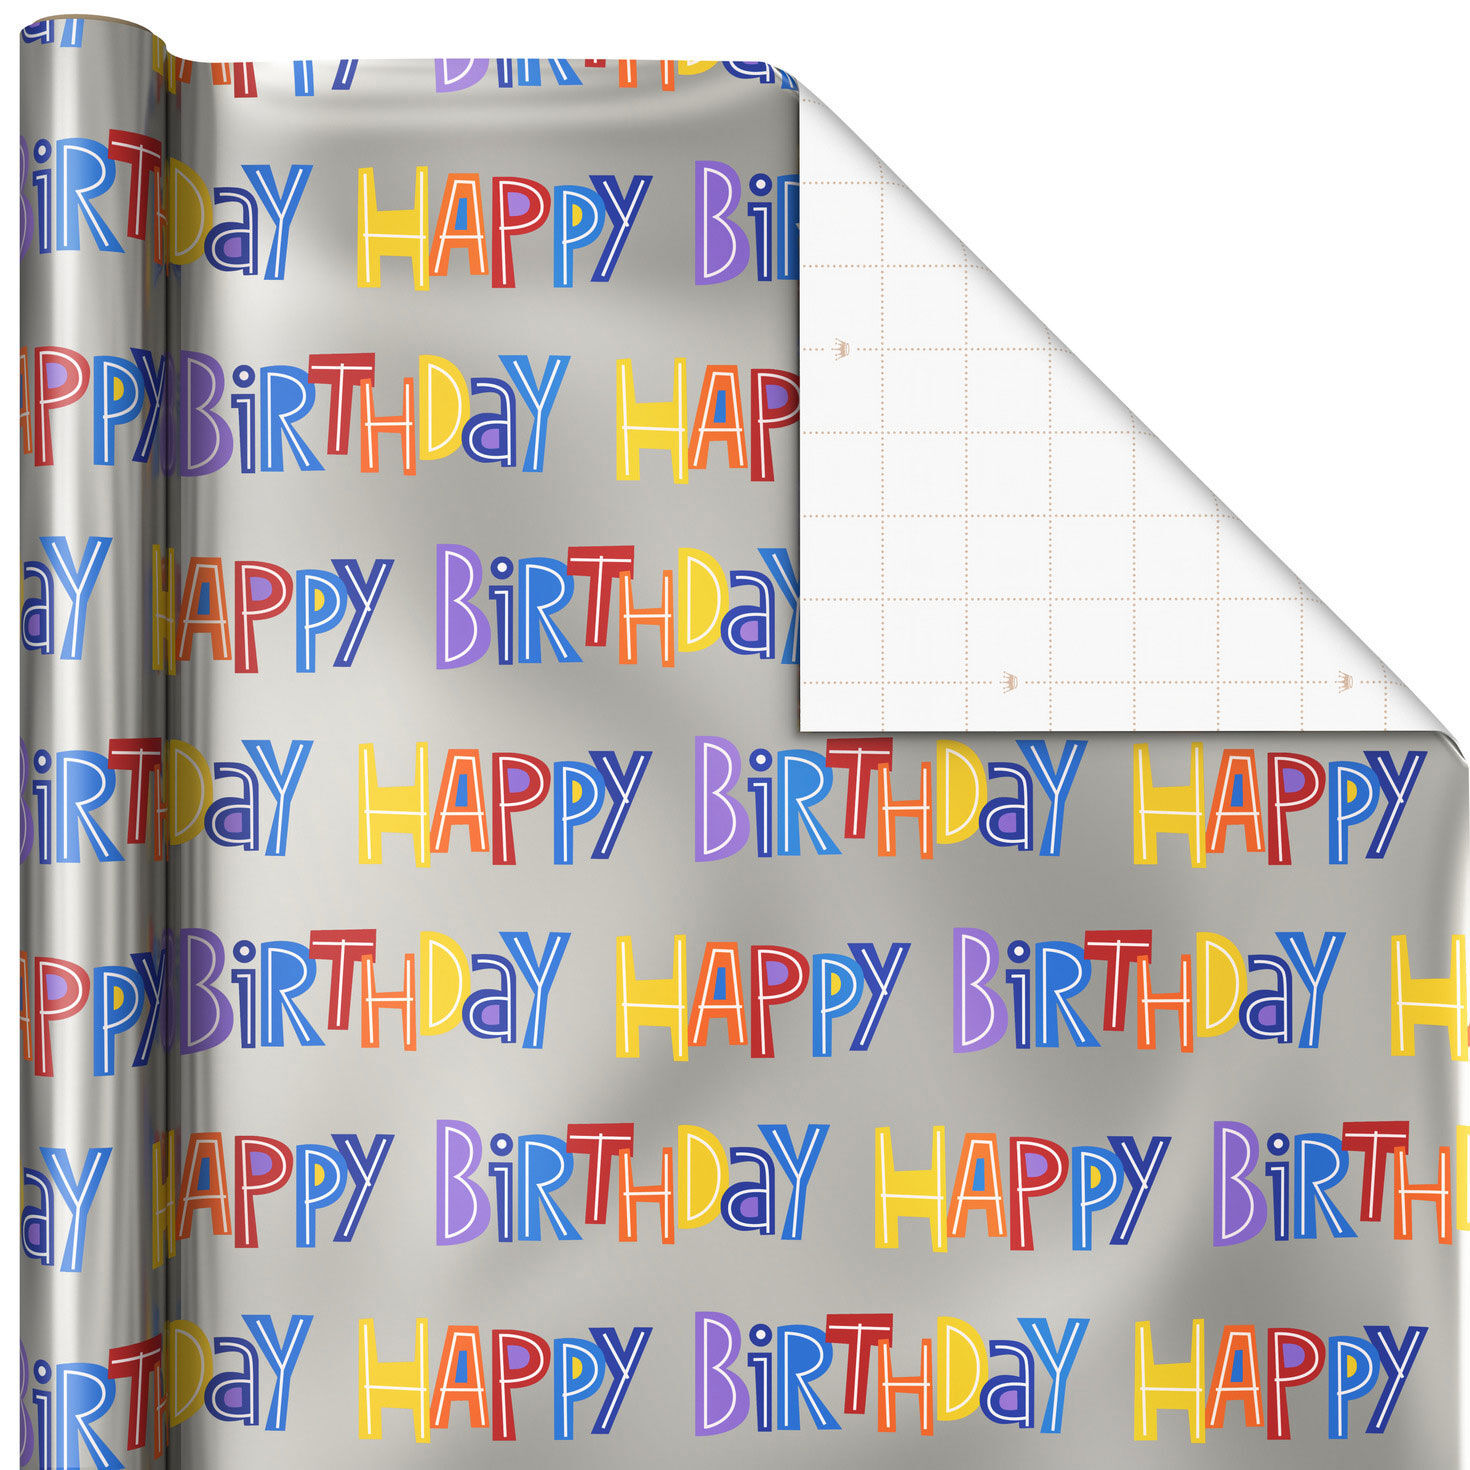 Happy Birthday Gift Wrap Roll, 50 Square Feet